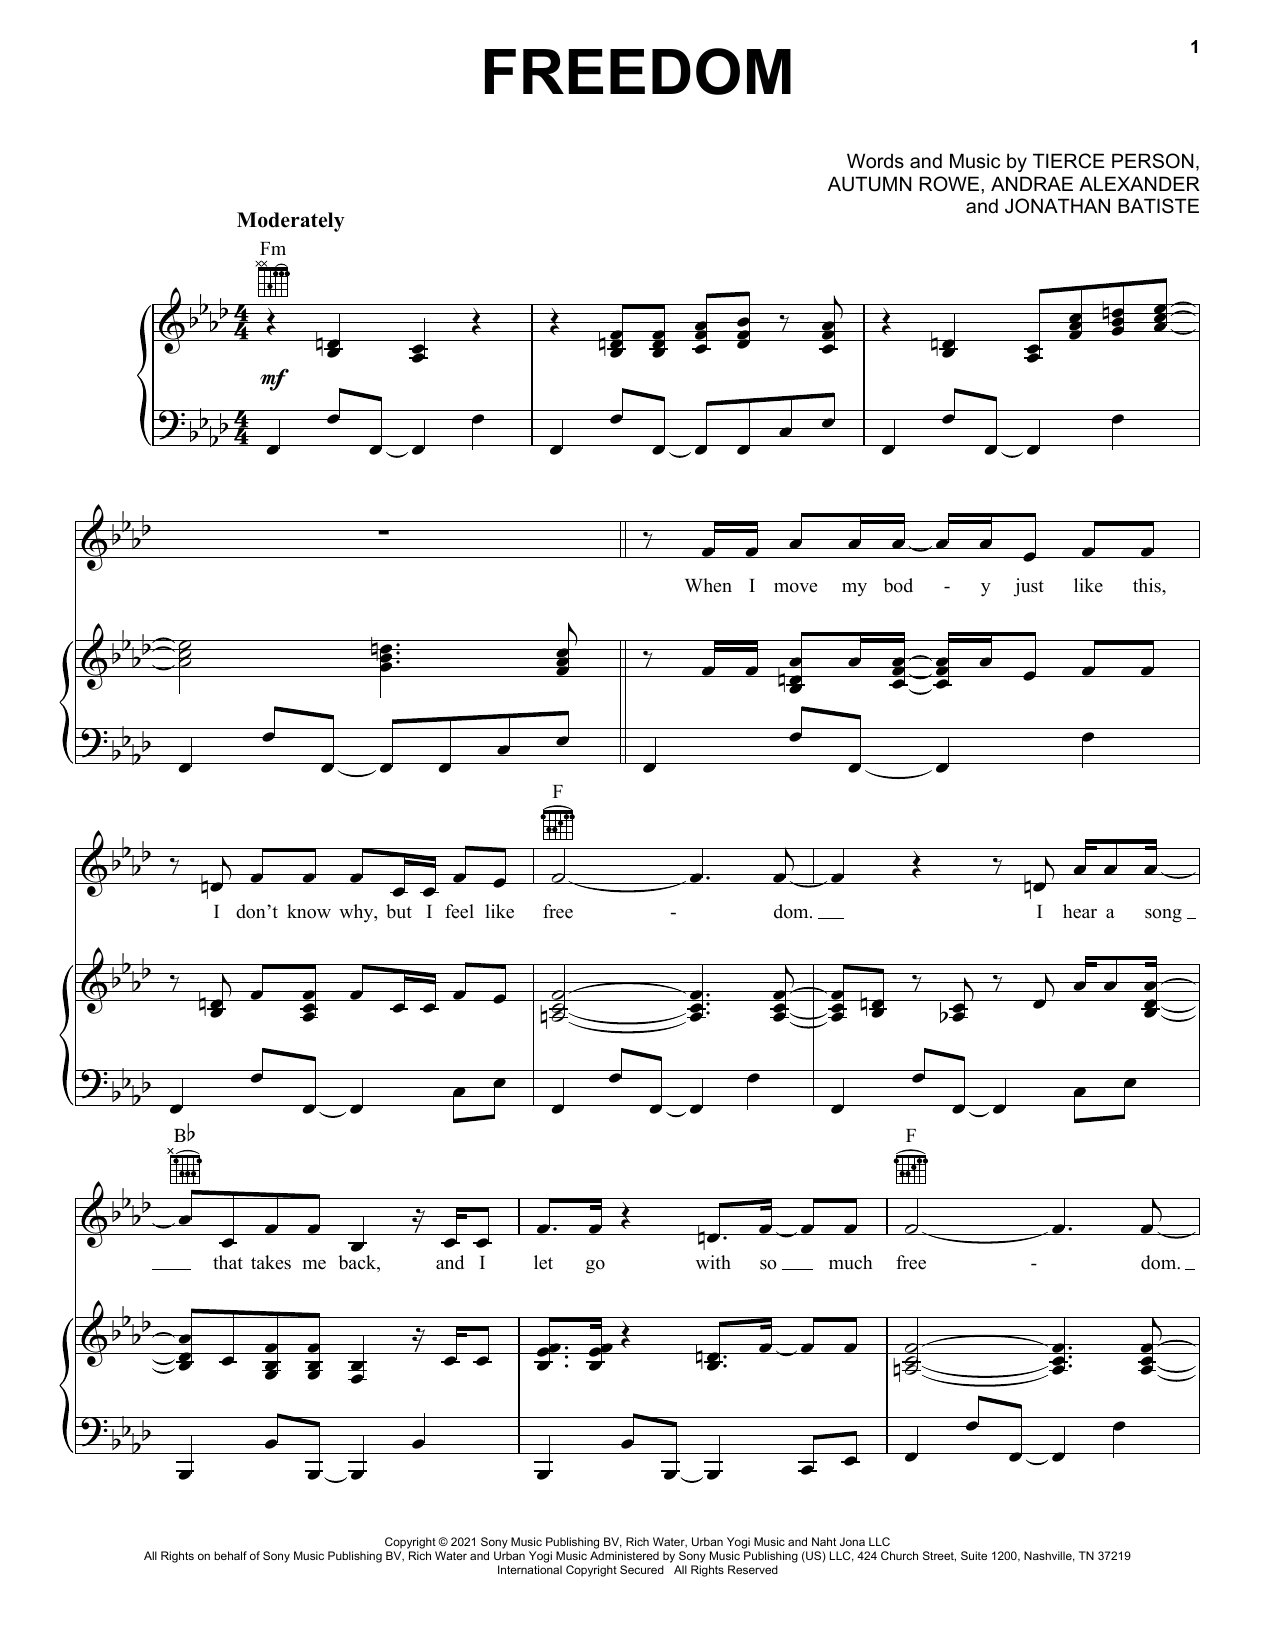 Jon Batiste FREEDOM Sheet Music Notes & Chords for Ukulele - Download or Print PDF